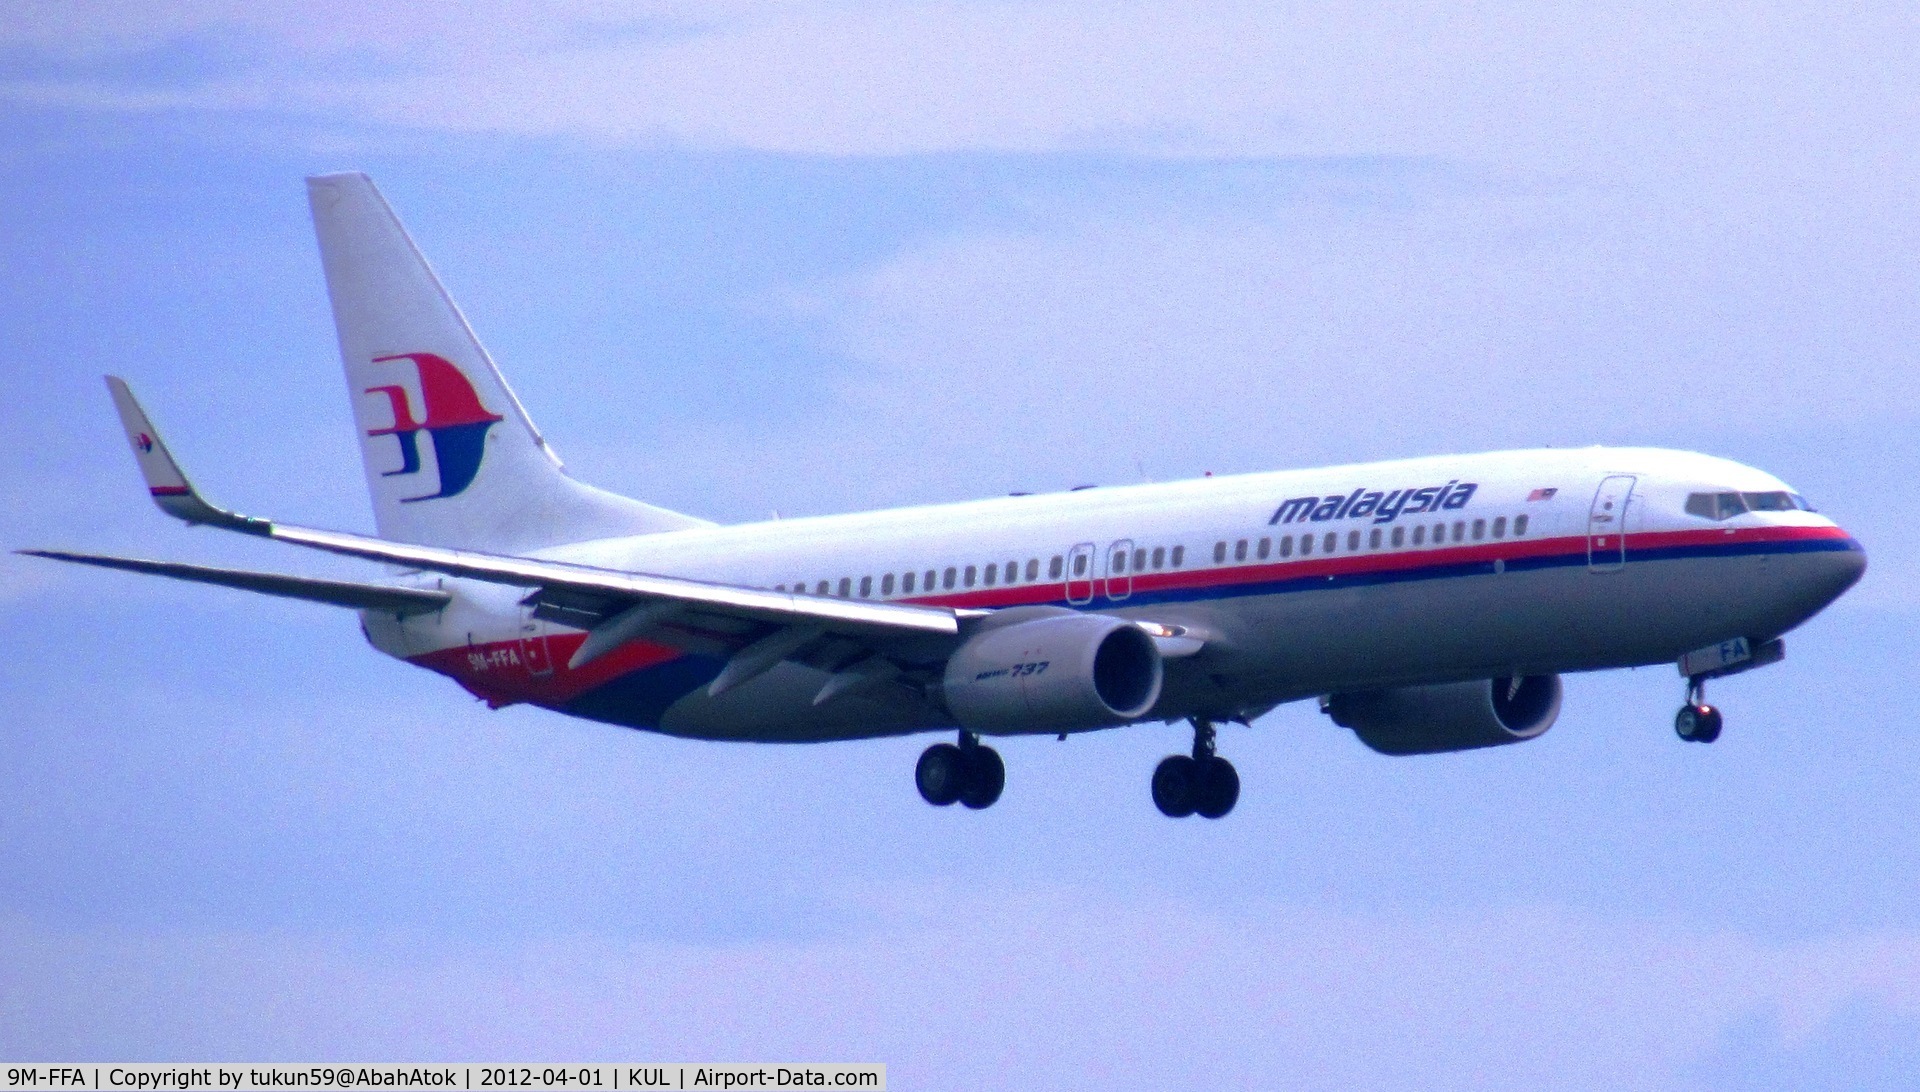 9M-FFA, 2006 Boeing 737-8Q8 C/N 30702/1953, Malaysia Airlines